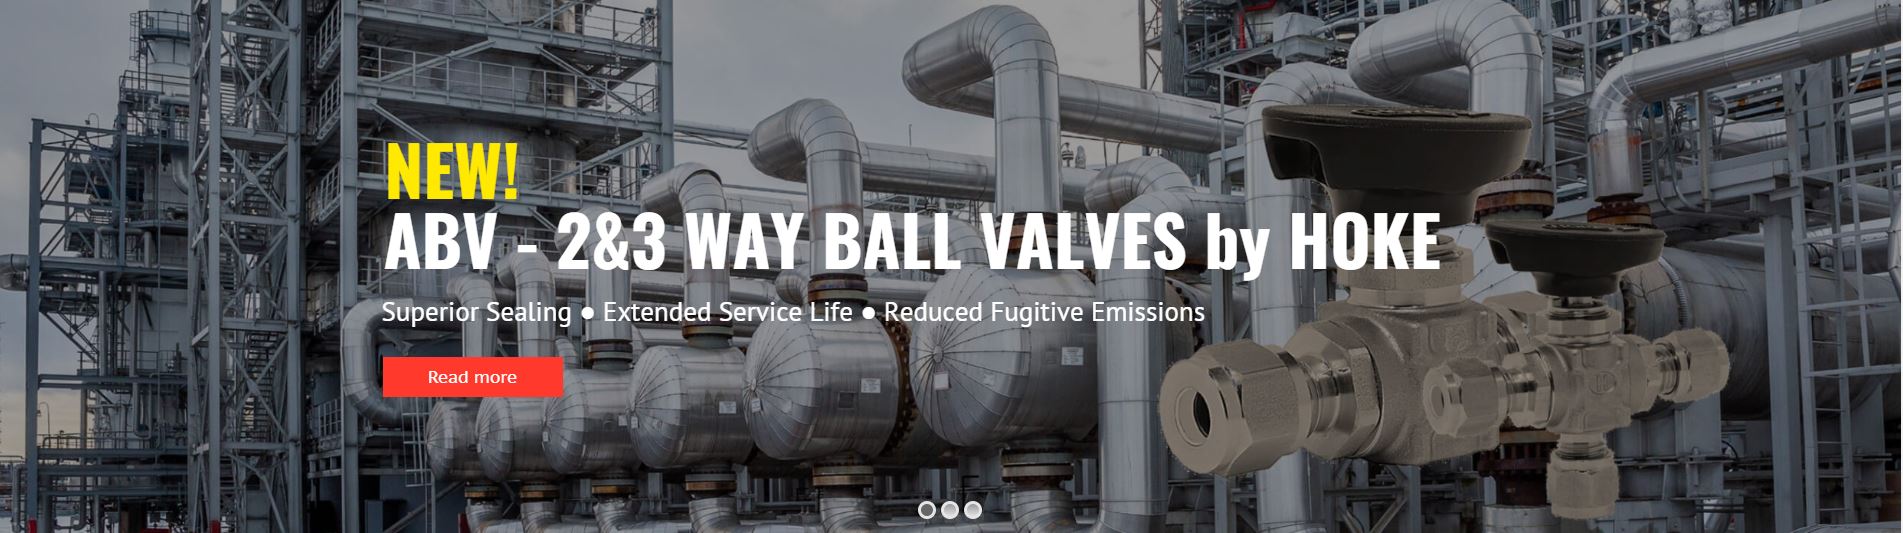 ABV Ball Valves